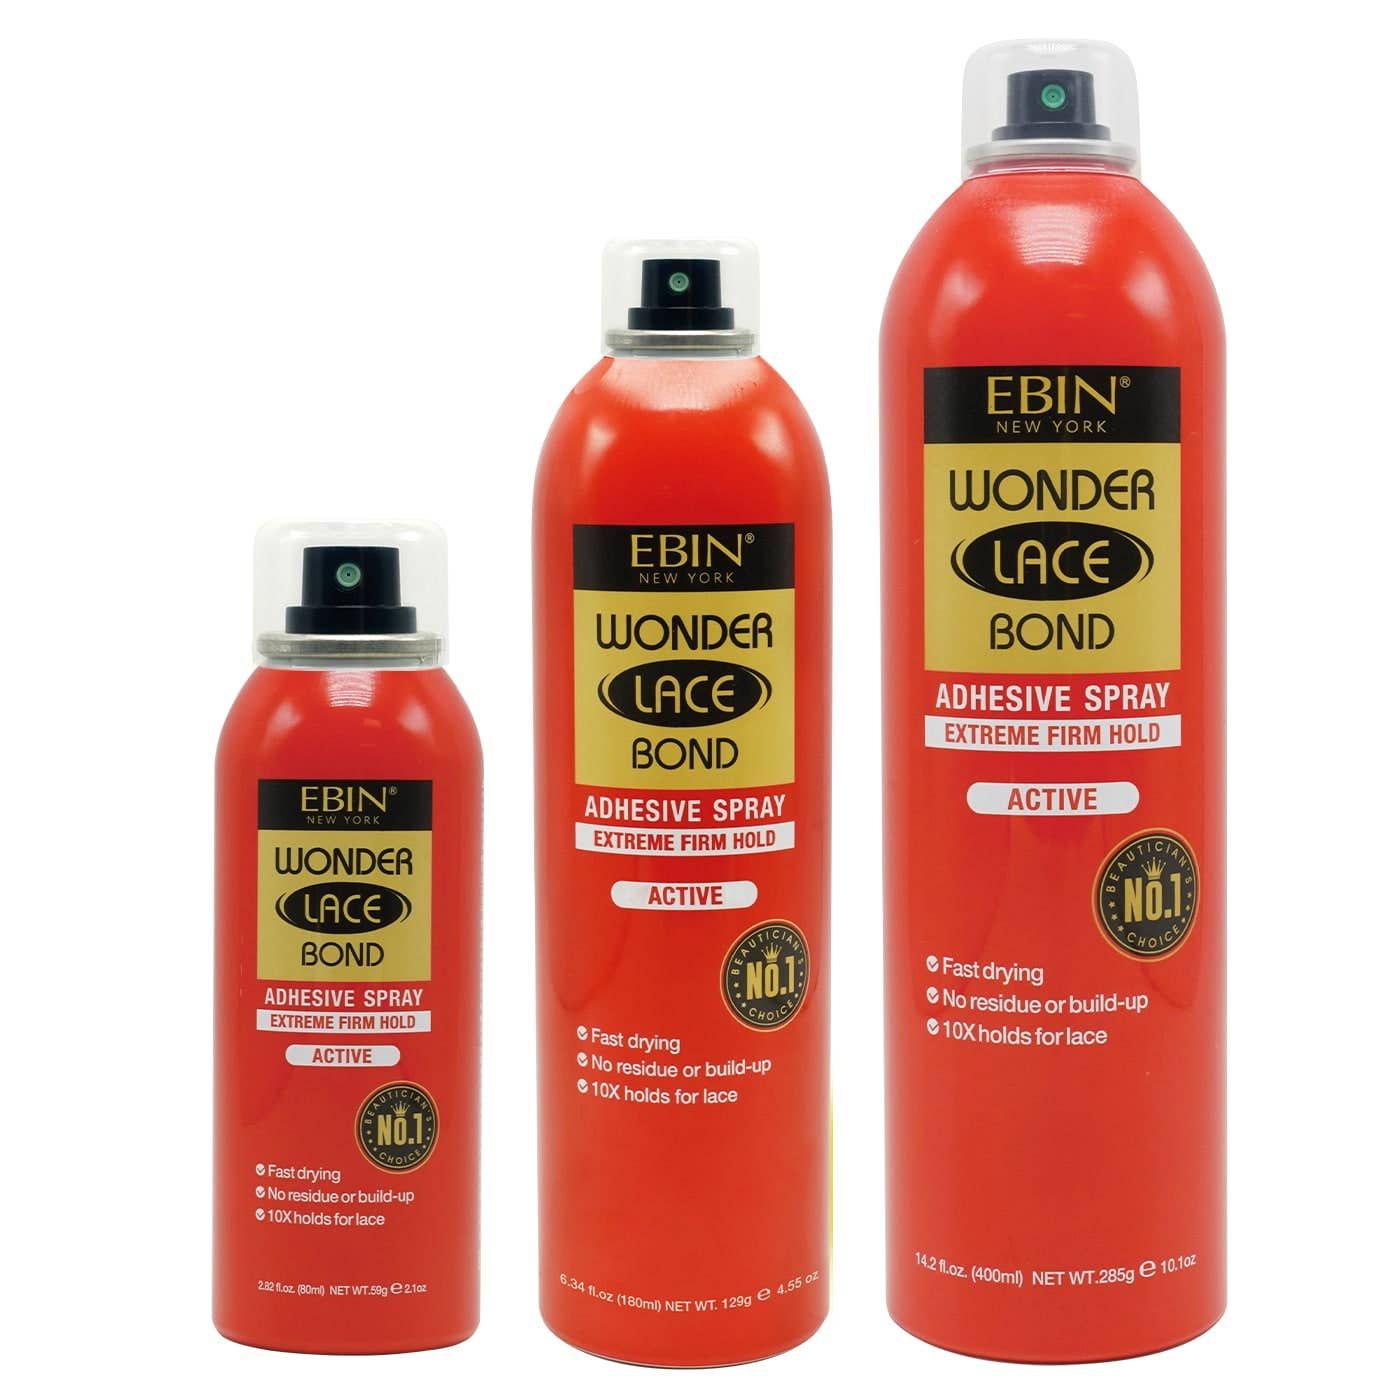 Wonder Lace Bond Wig Adhesive Spray - Extreme Firm Hold (14.2oz/ 400ml)